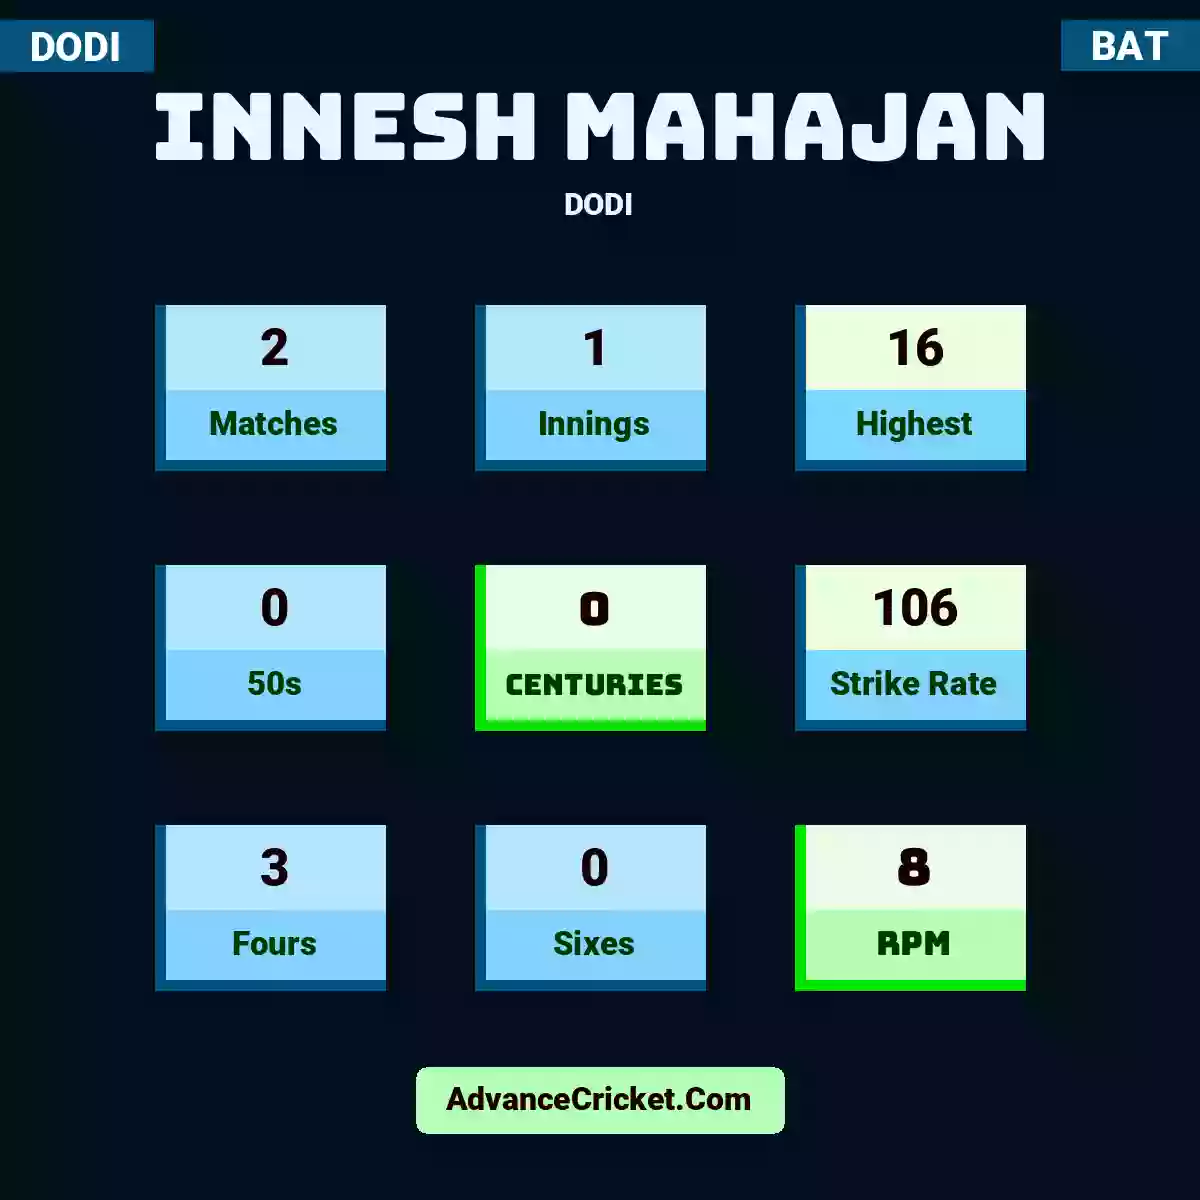 Innesh Mahajan DODI , Innesh Mahajan played 2 matches, scored 16 runs as highest, 0 half-centuries, and 0 centuries, with a strike rate of 106. I.Mahajan hit 3 fours and 0 sixes, with an RPM of 8.